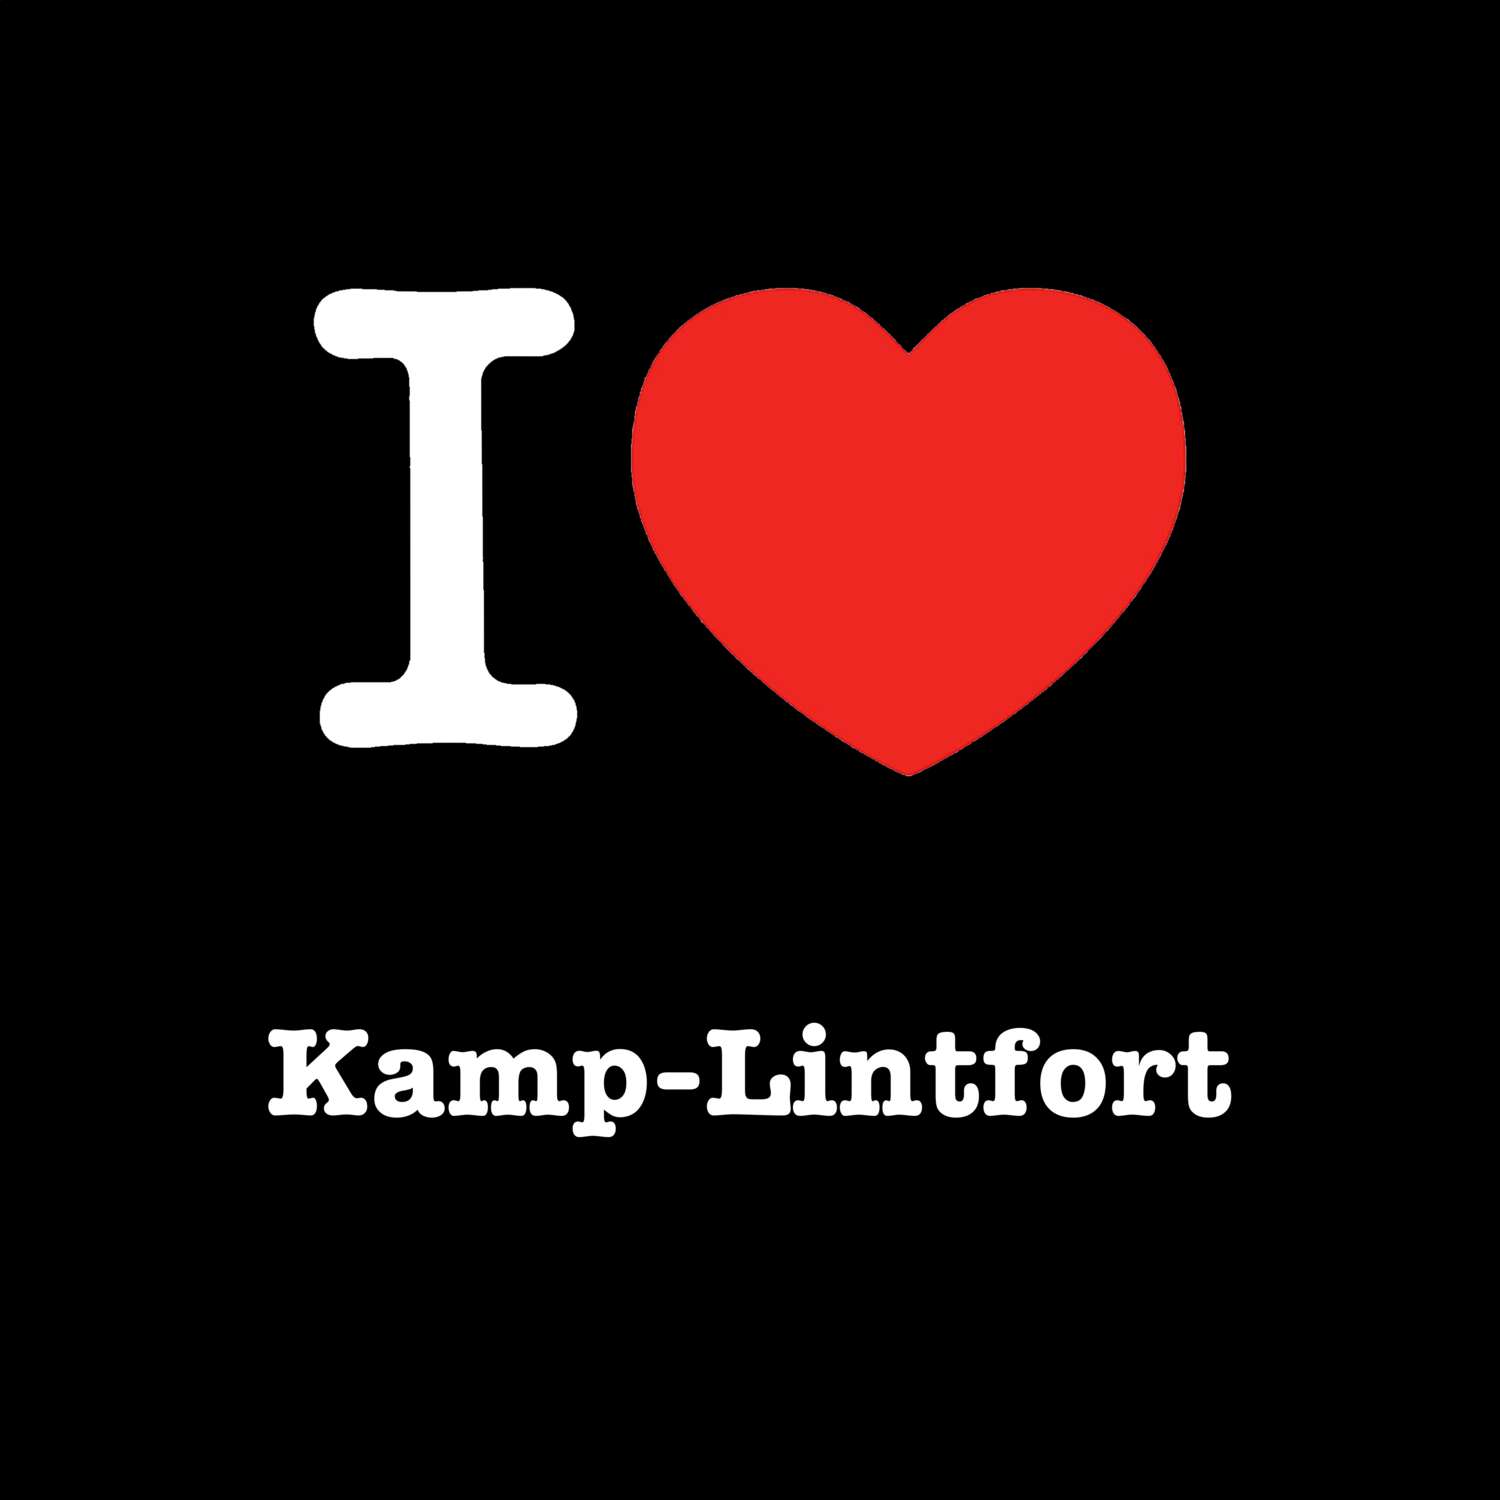 Kamp-Lintfort T-Shirt »I love«